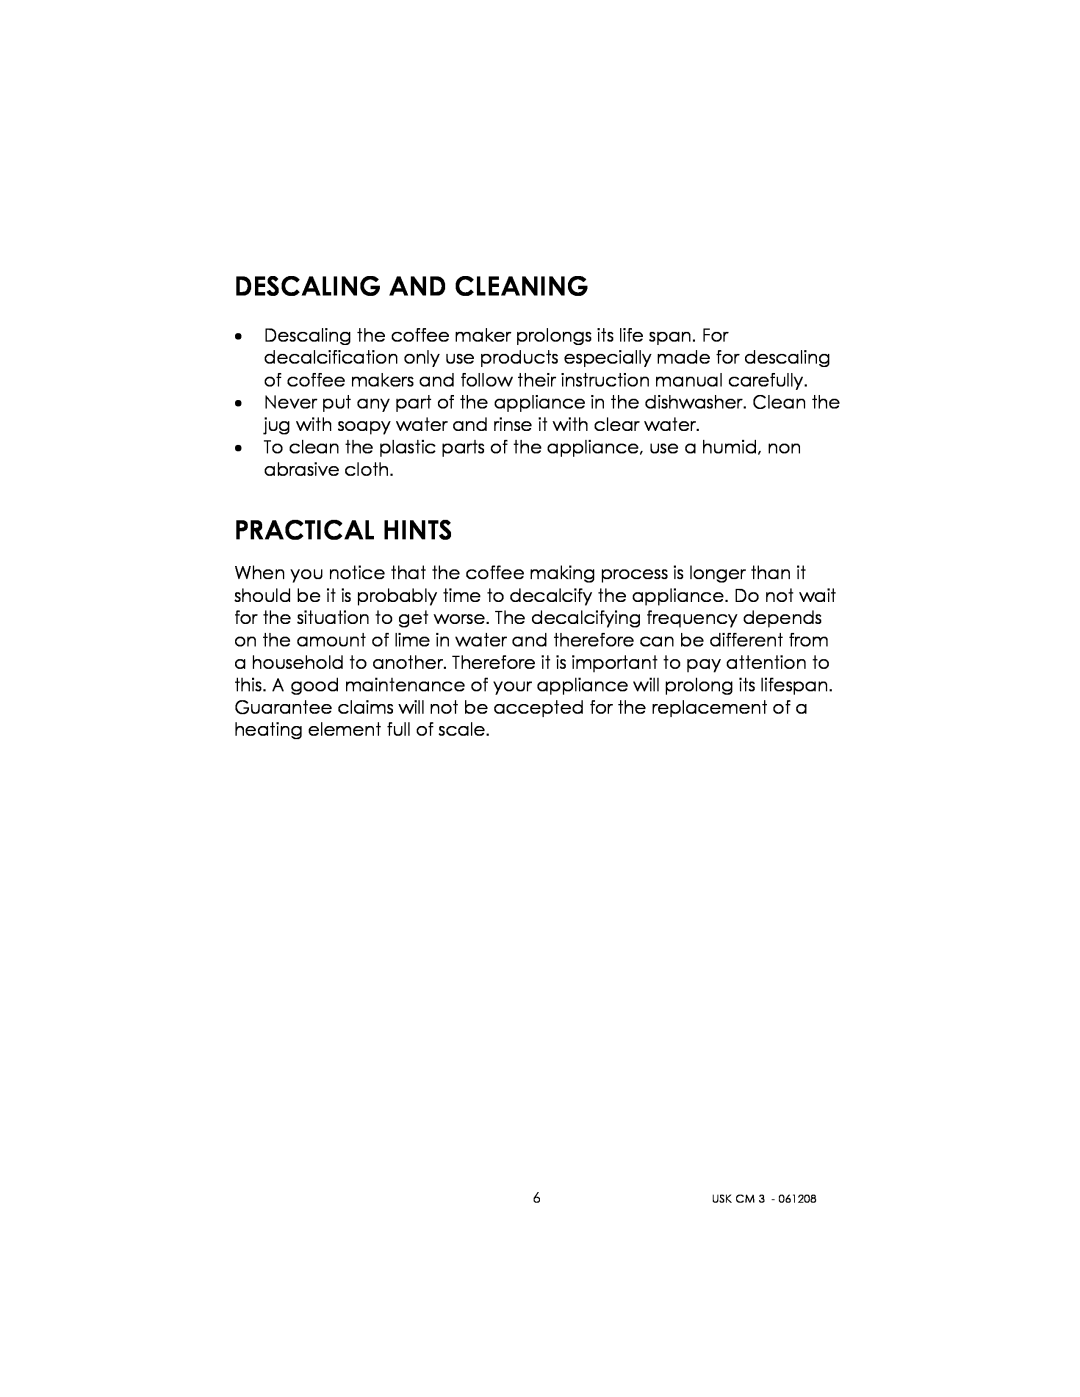 Kalorik USK CM 3 manual Descaling And Cleaning, Practical Hints 